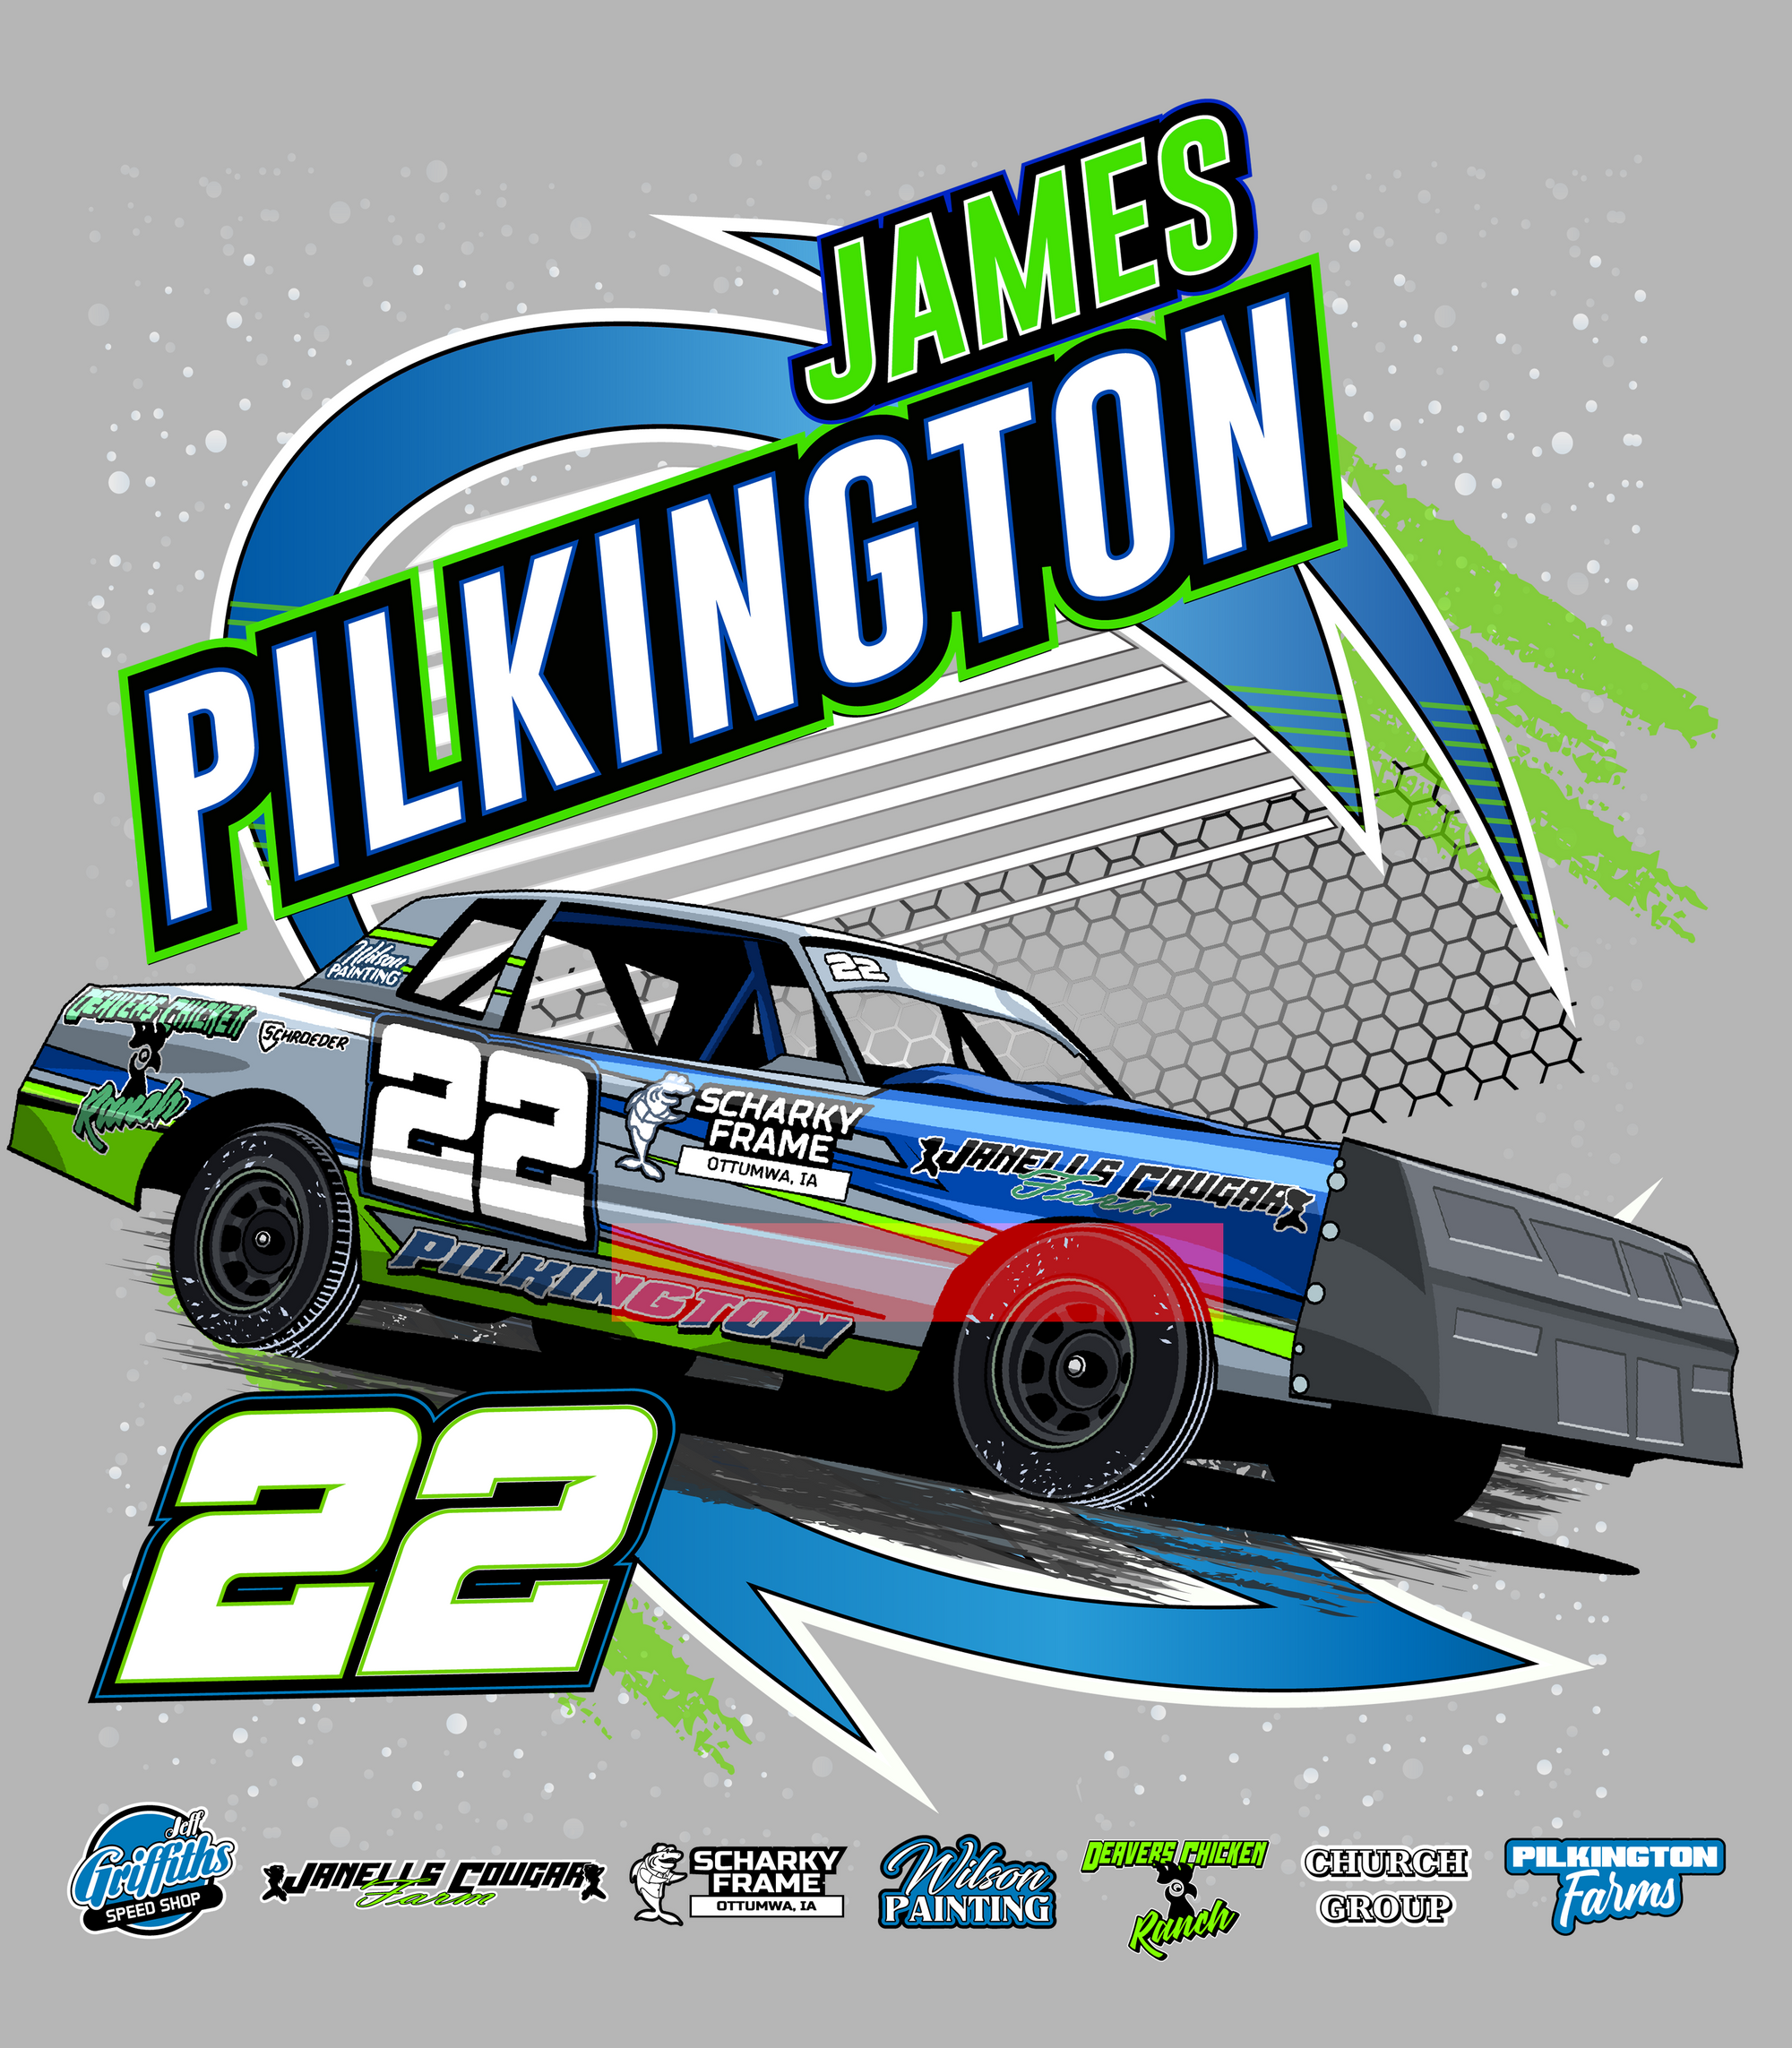 James Pilkington